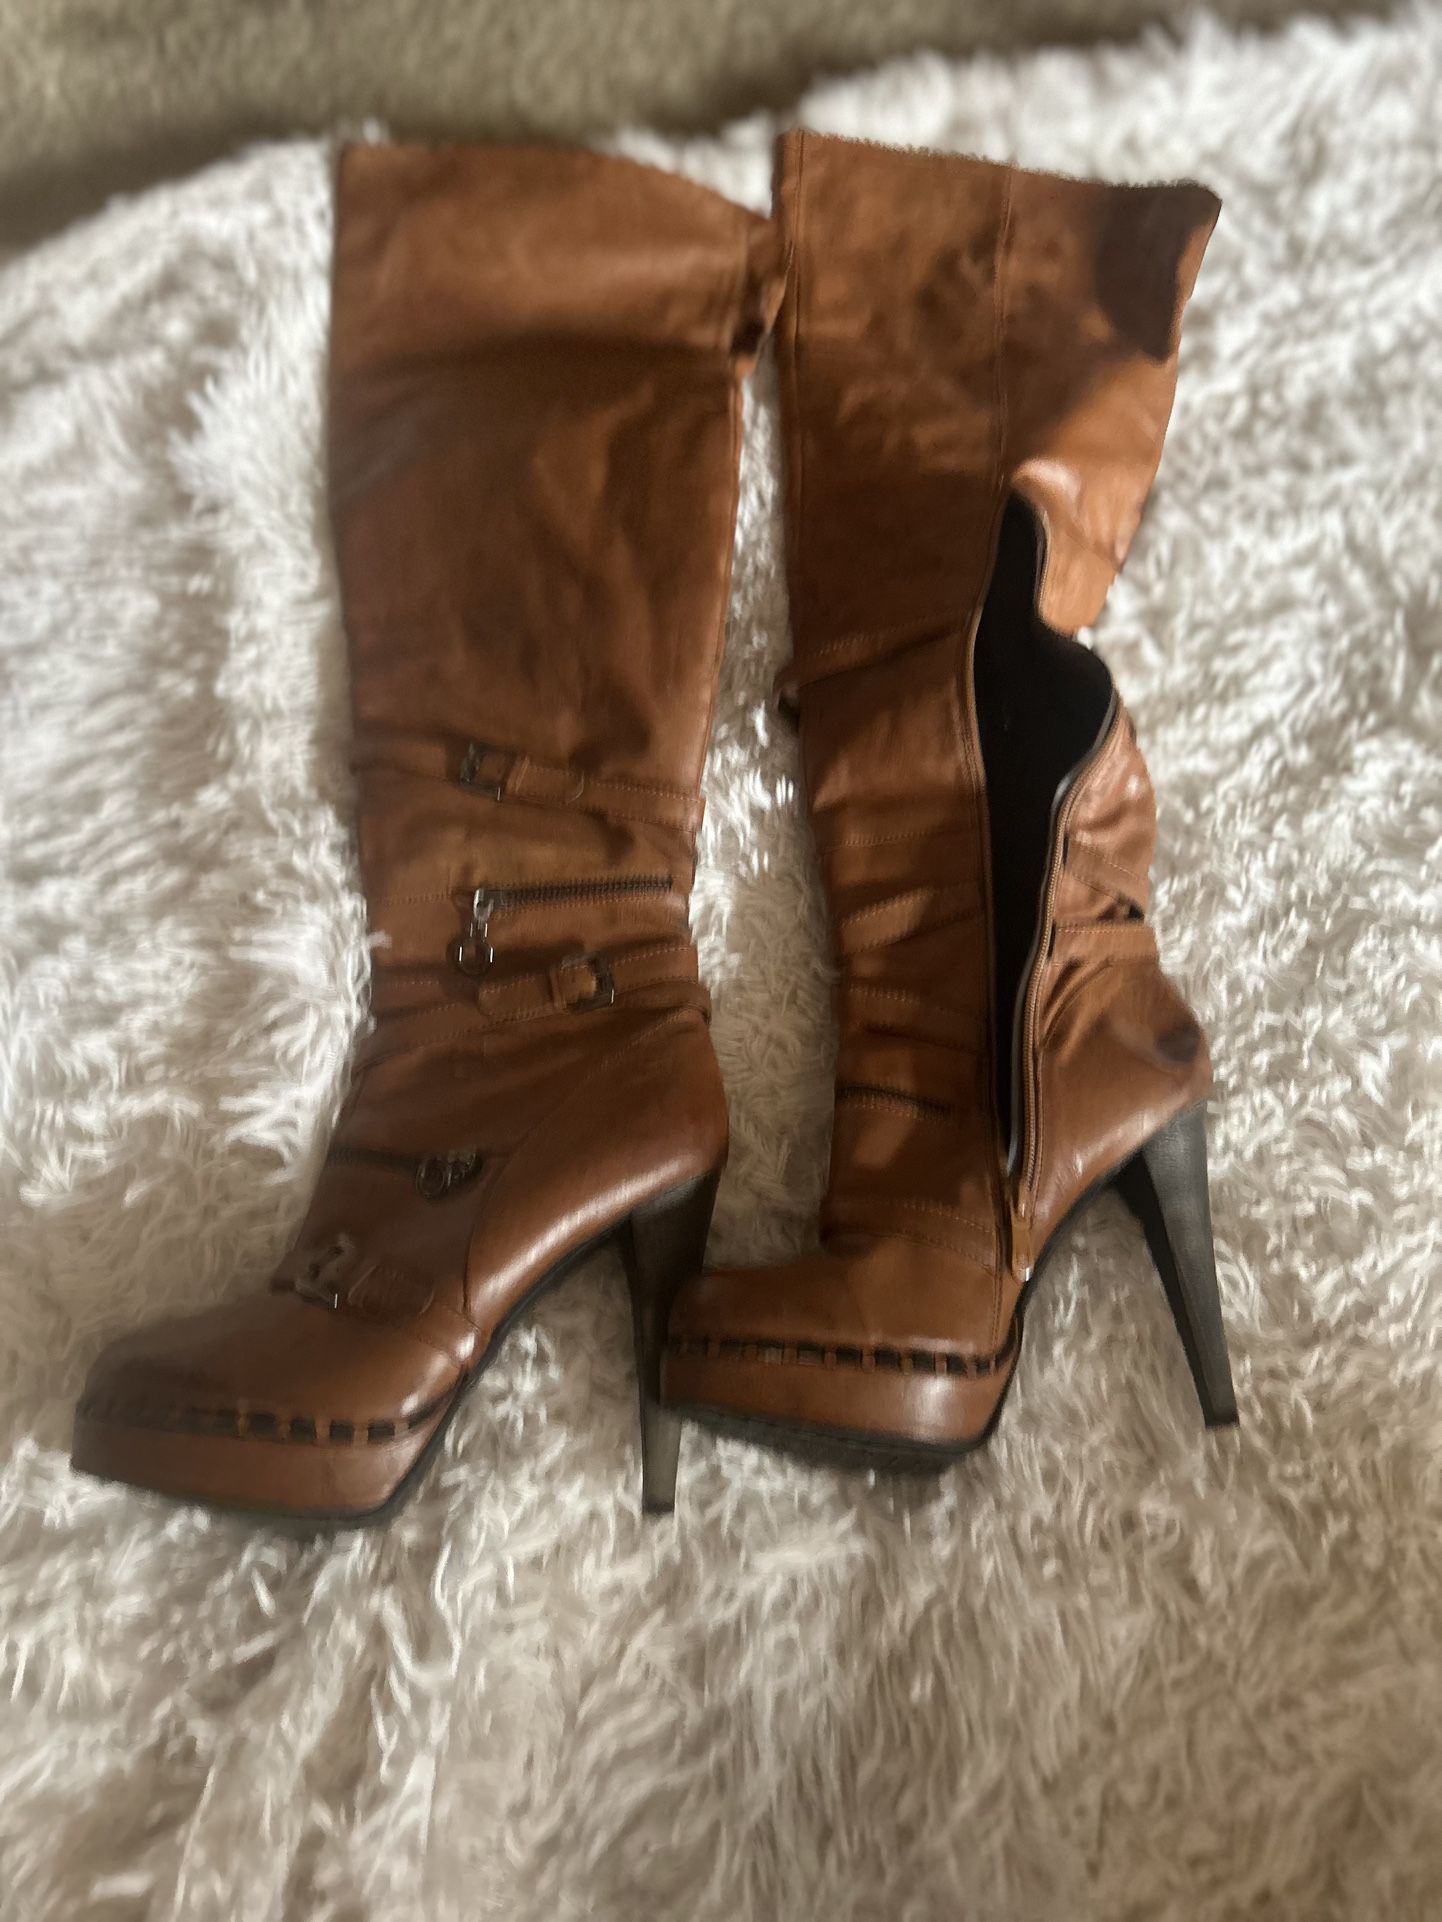 Brown Stiletto Boots